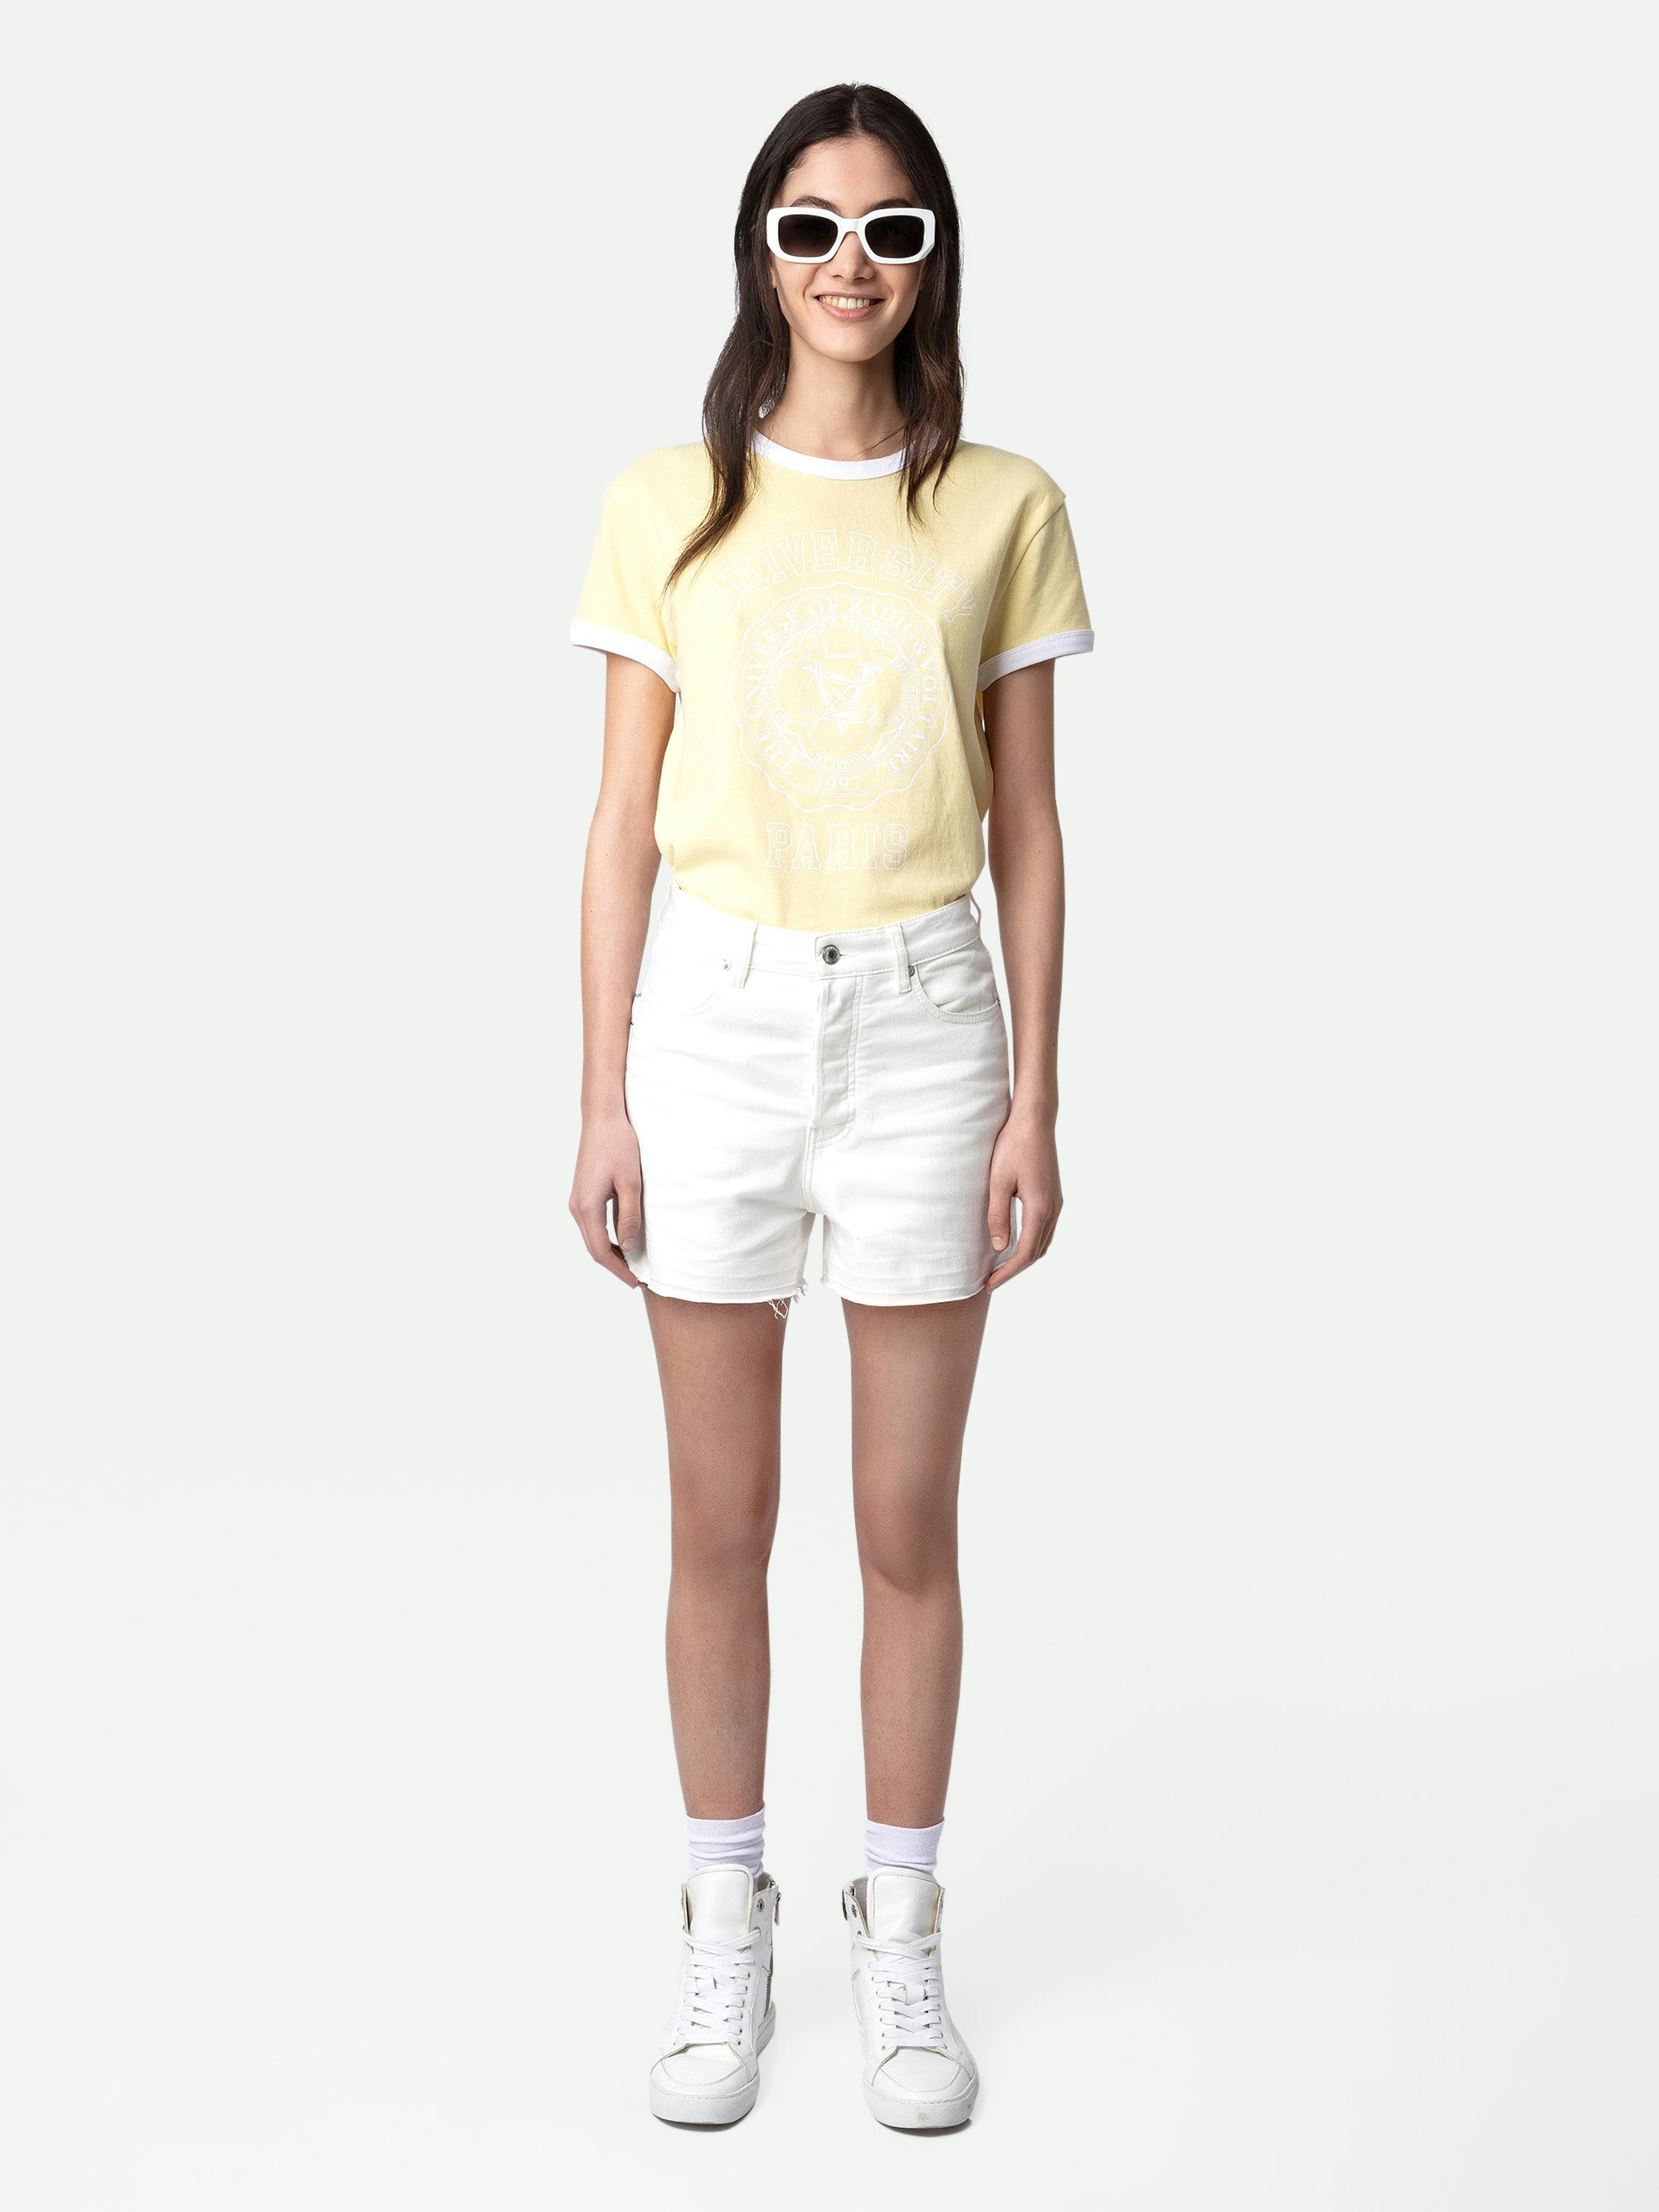 Walk University T-shirt - Light yellow cotton T-shirt with short sleeves, University motif and contrasting trim.